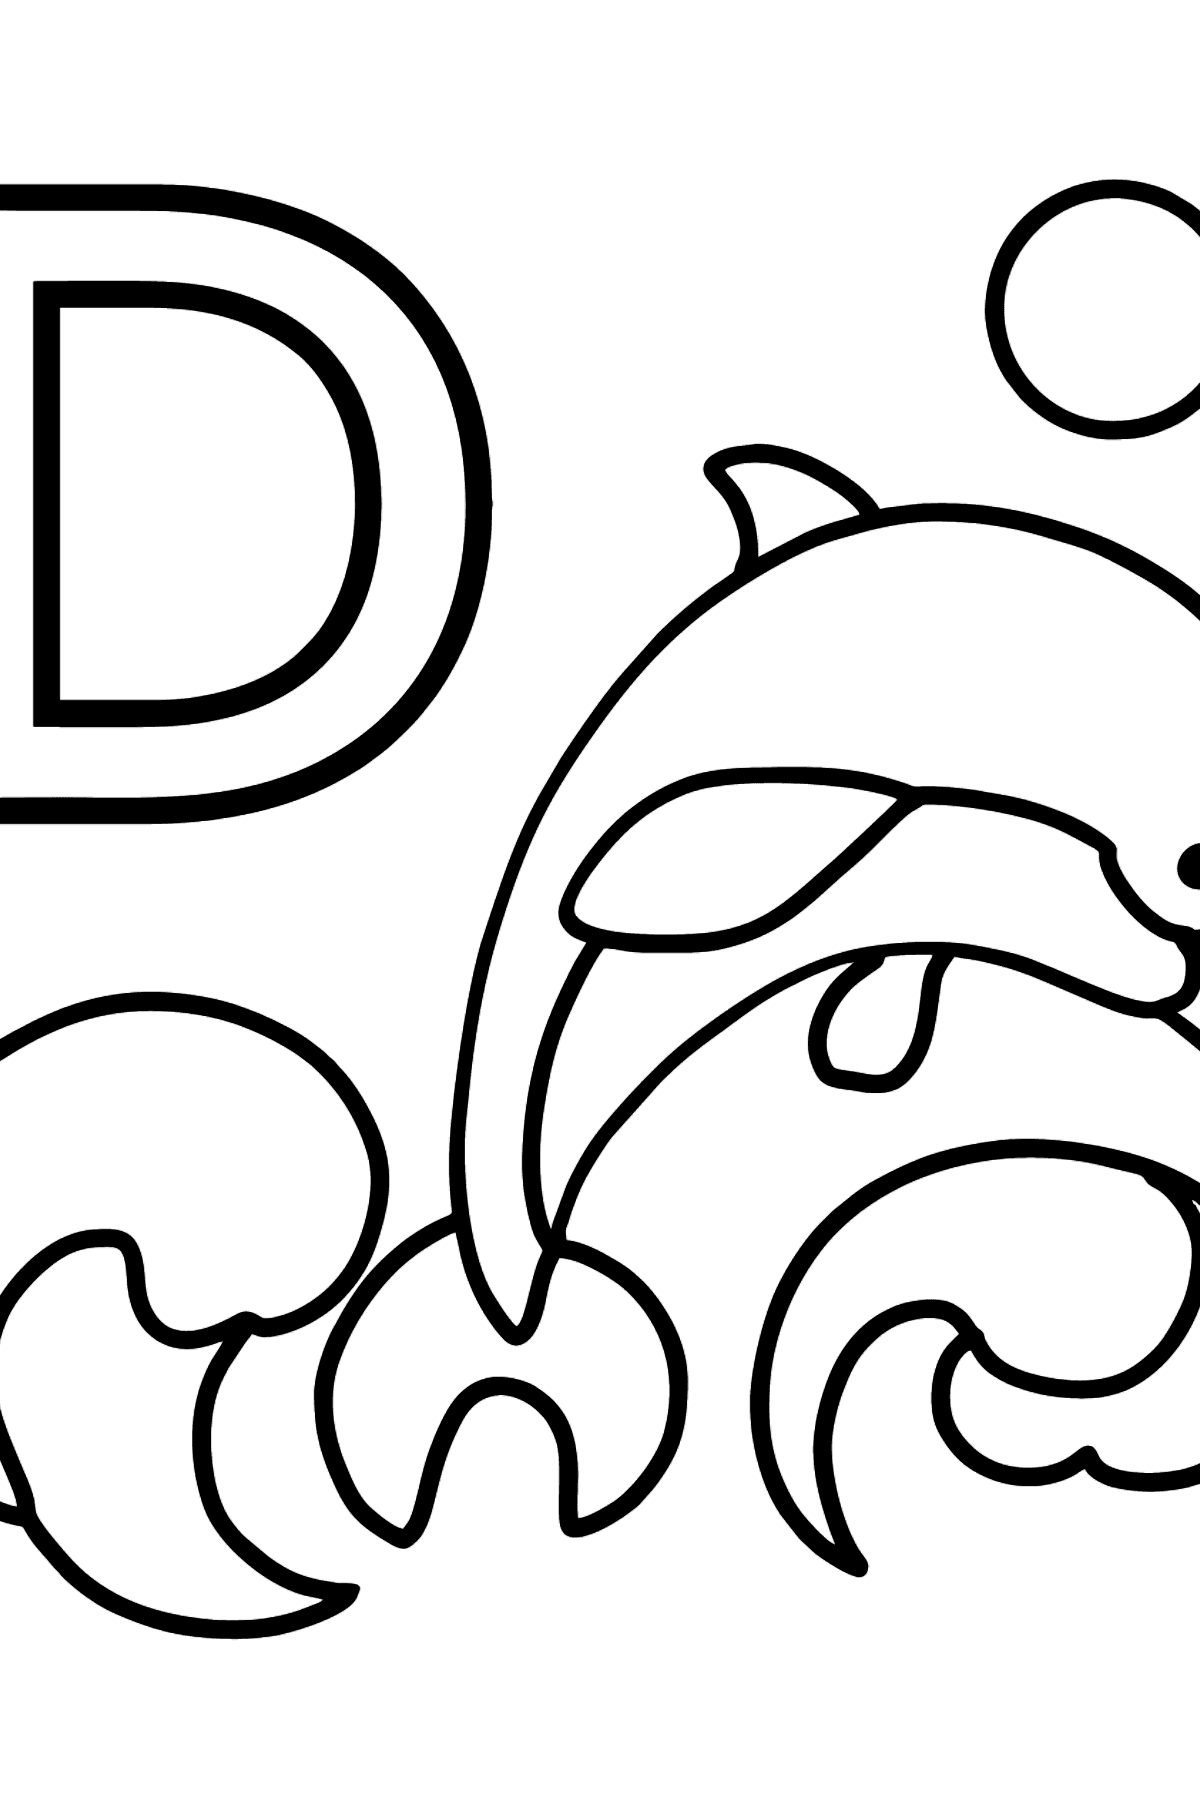 Раскраска Буква D Английского алфавита - DOLPHIN - Картинки для Детей